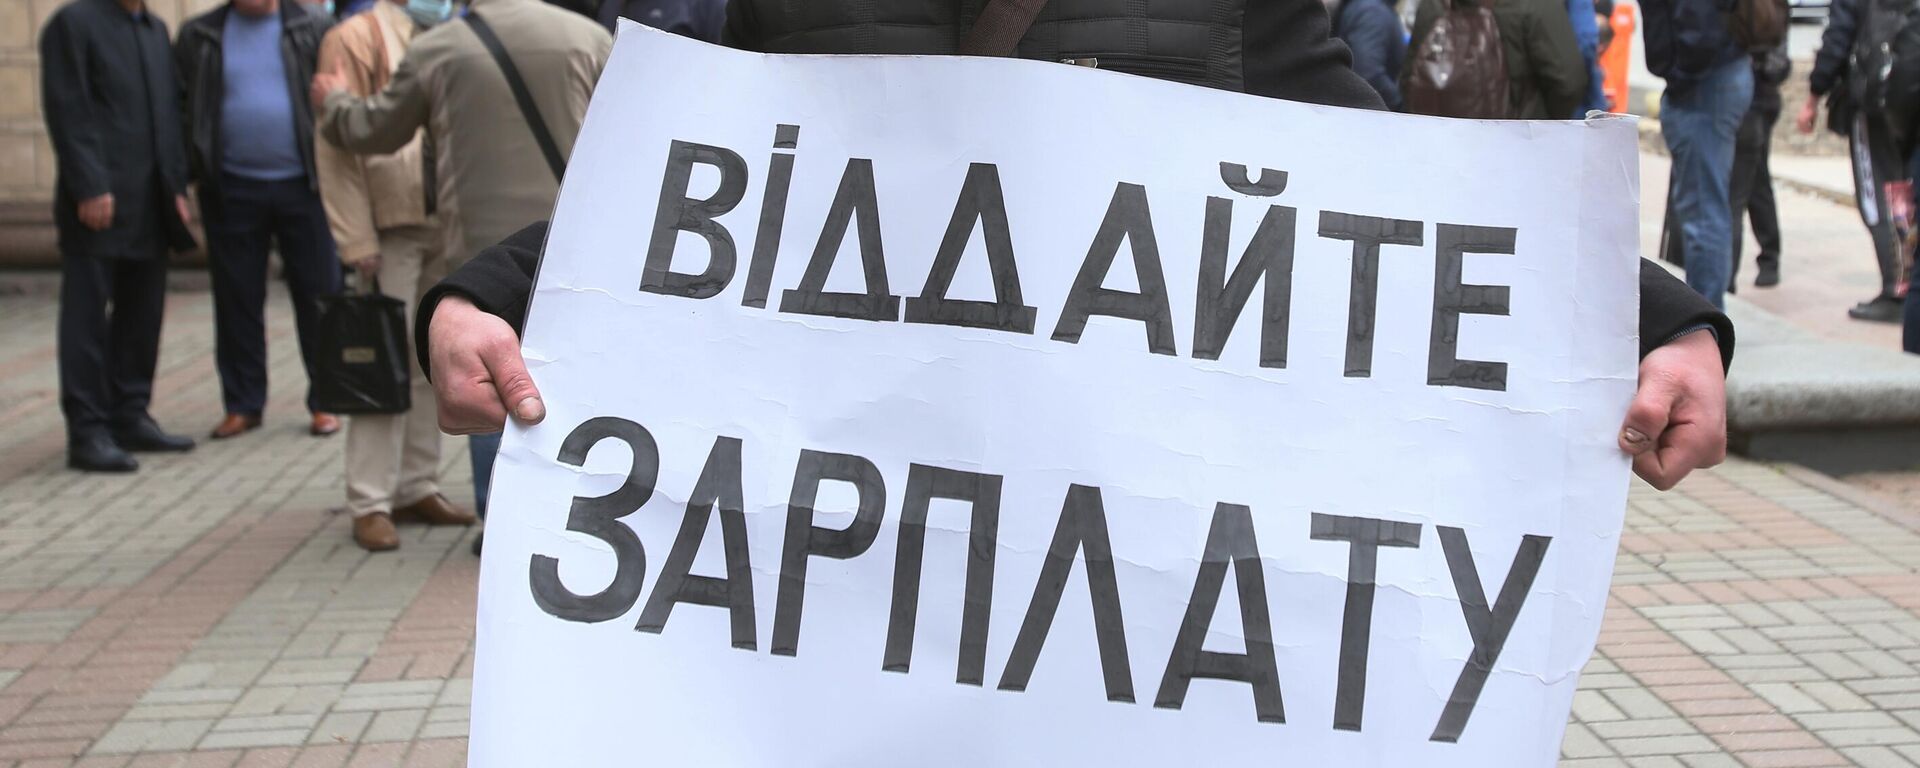 Акция протеста шахтеров в Киеве - Sputnik Латвия, 1920, 19.08.2021